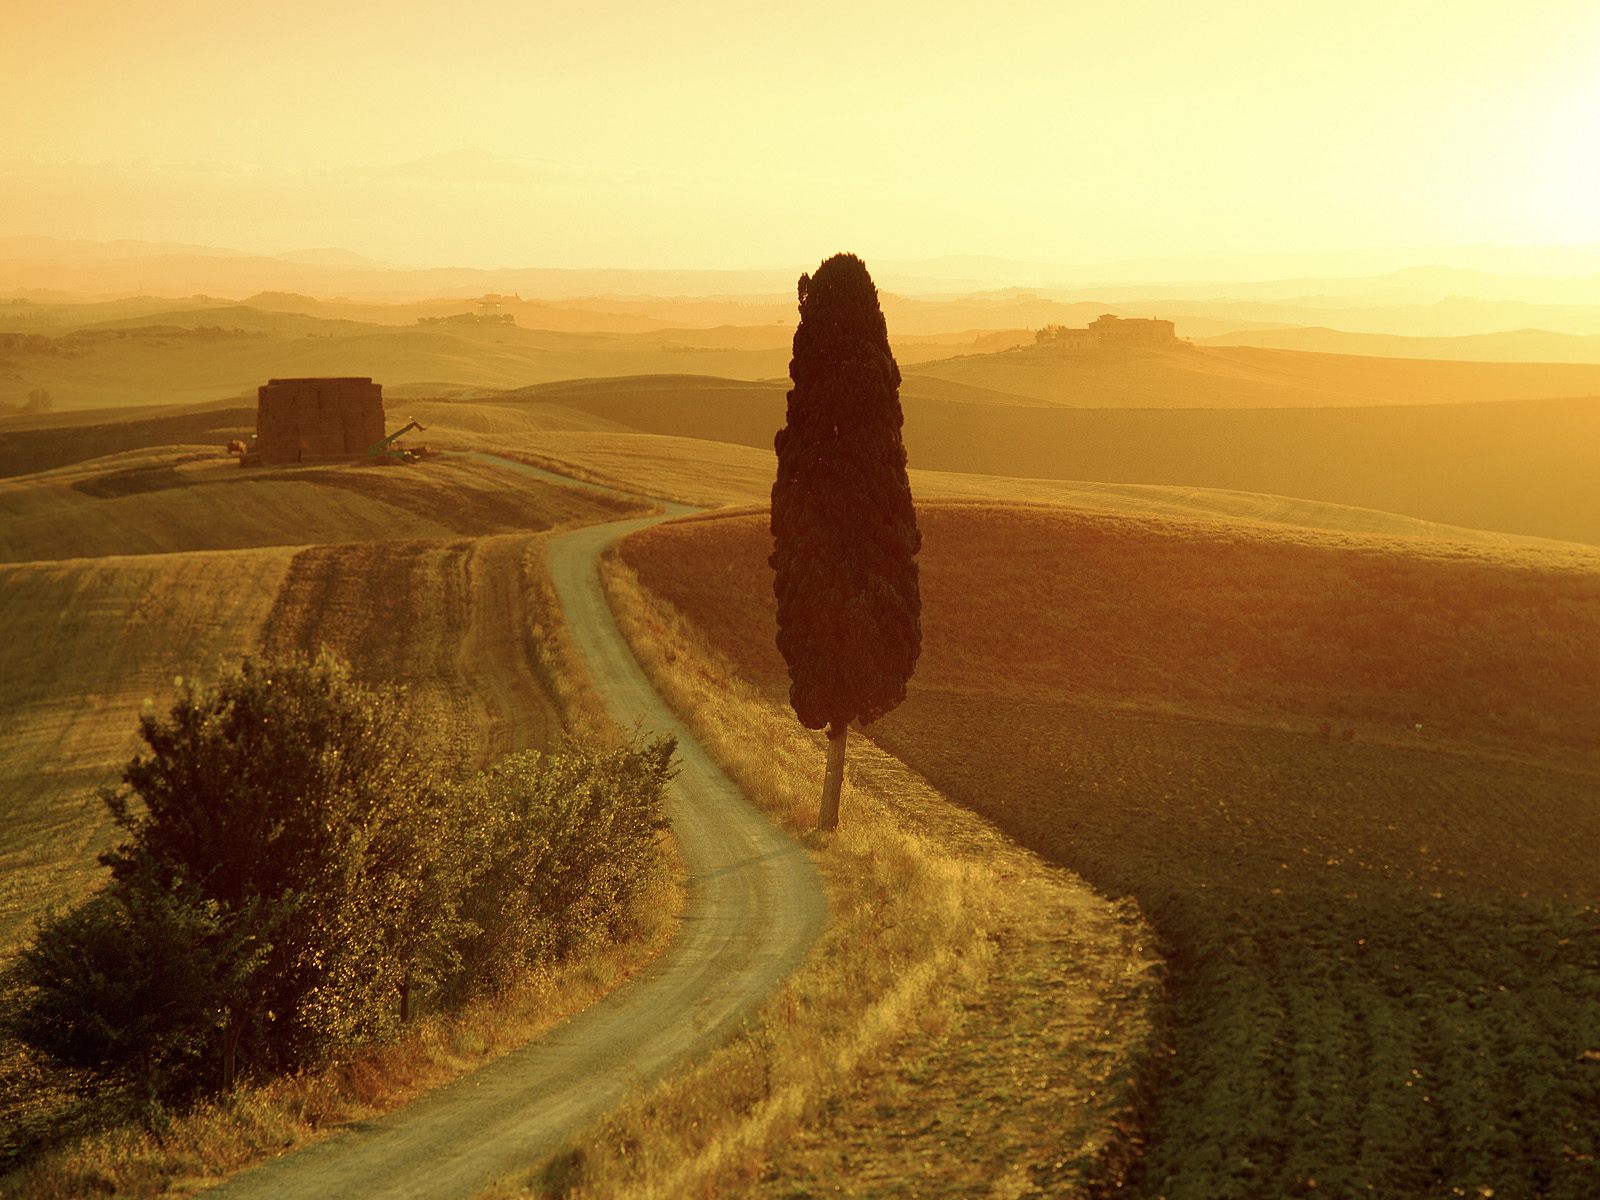 Tuscan Landscape at Sunrise, Italy